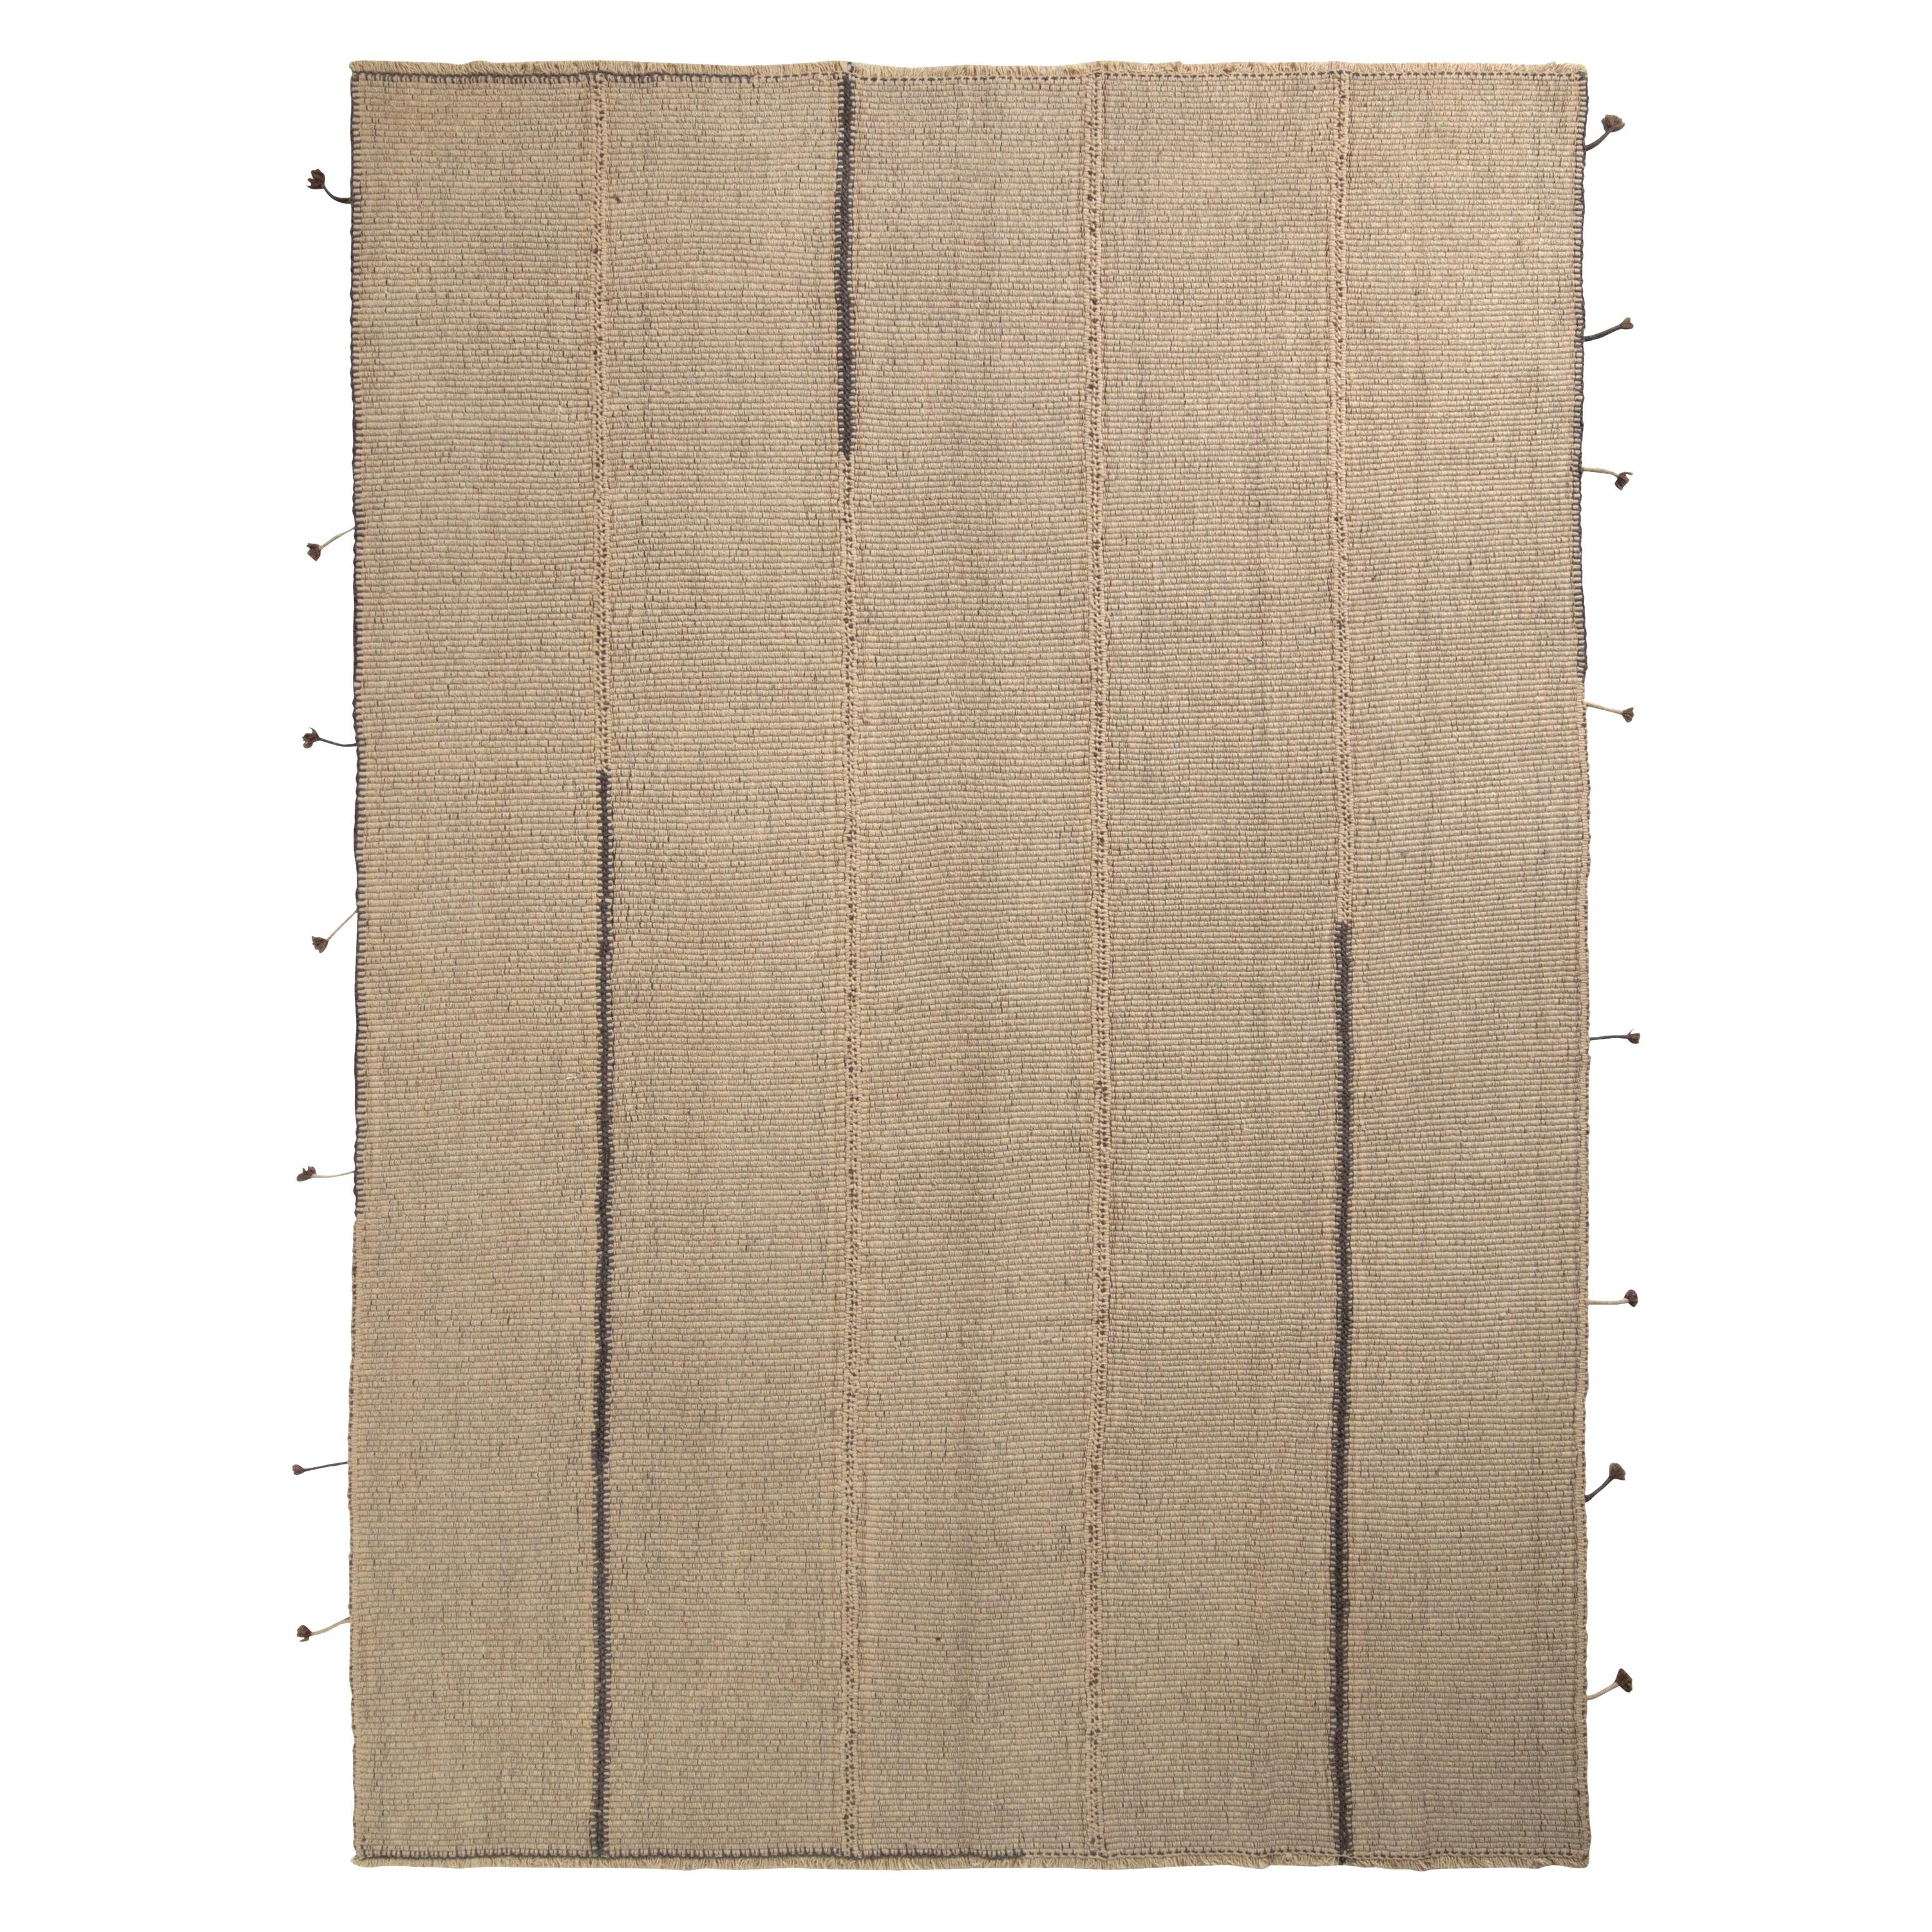 Rug & Kilim’s Modern Custom Kilim in Beige-Brown, Black Striped Pattern For Sale